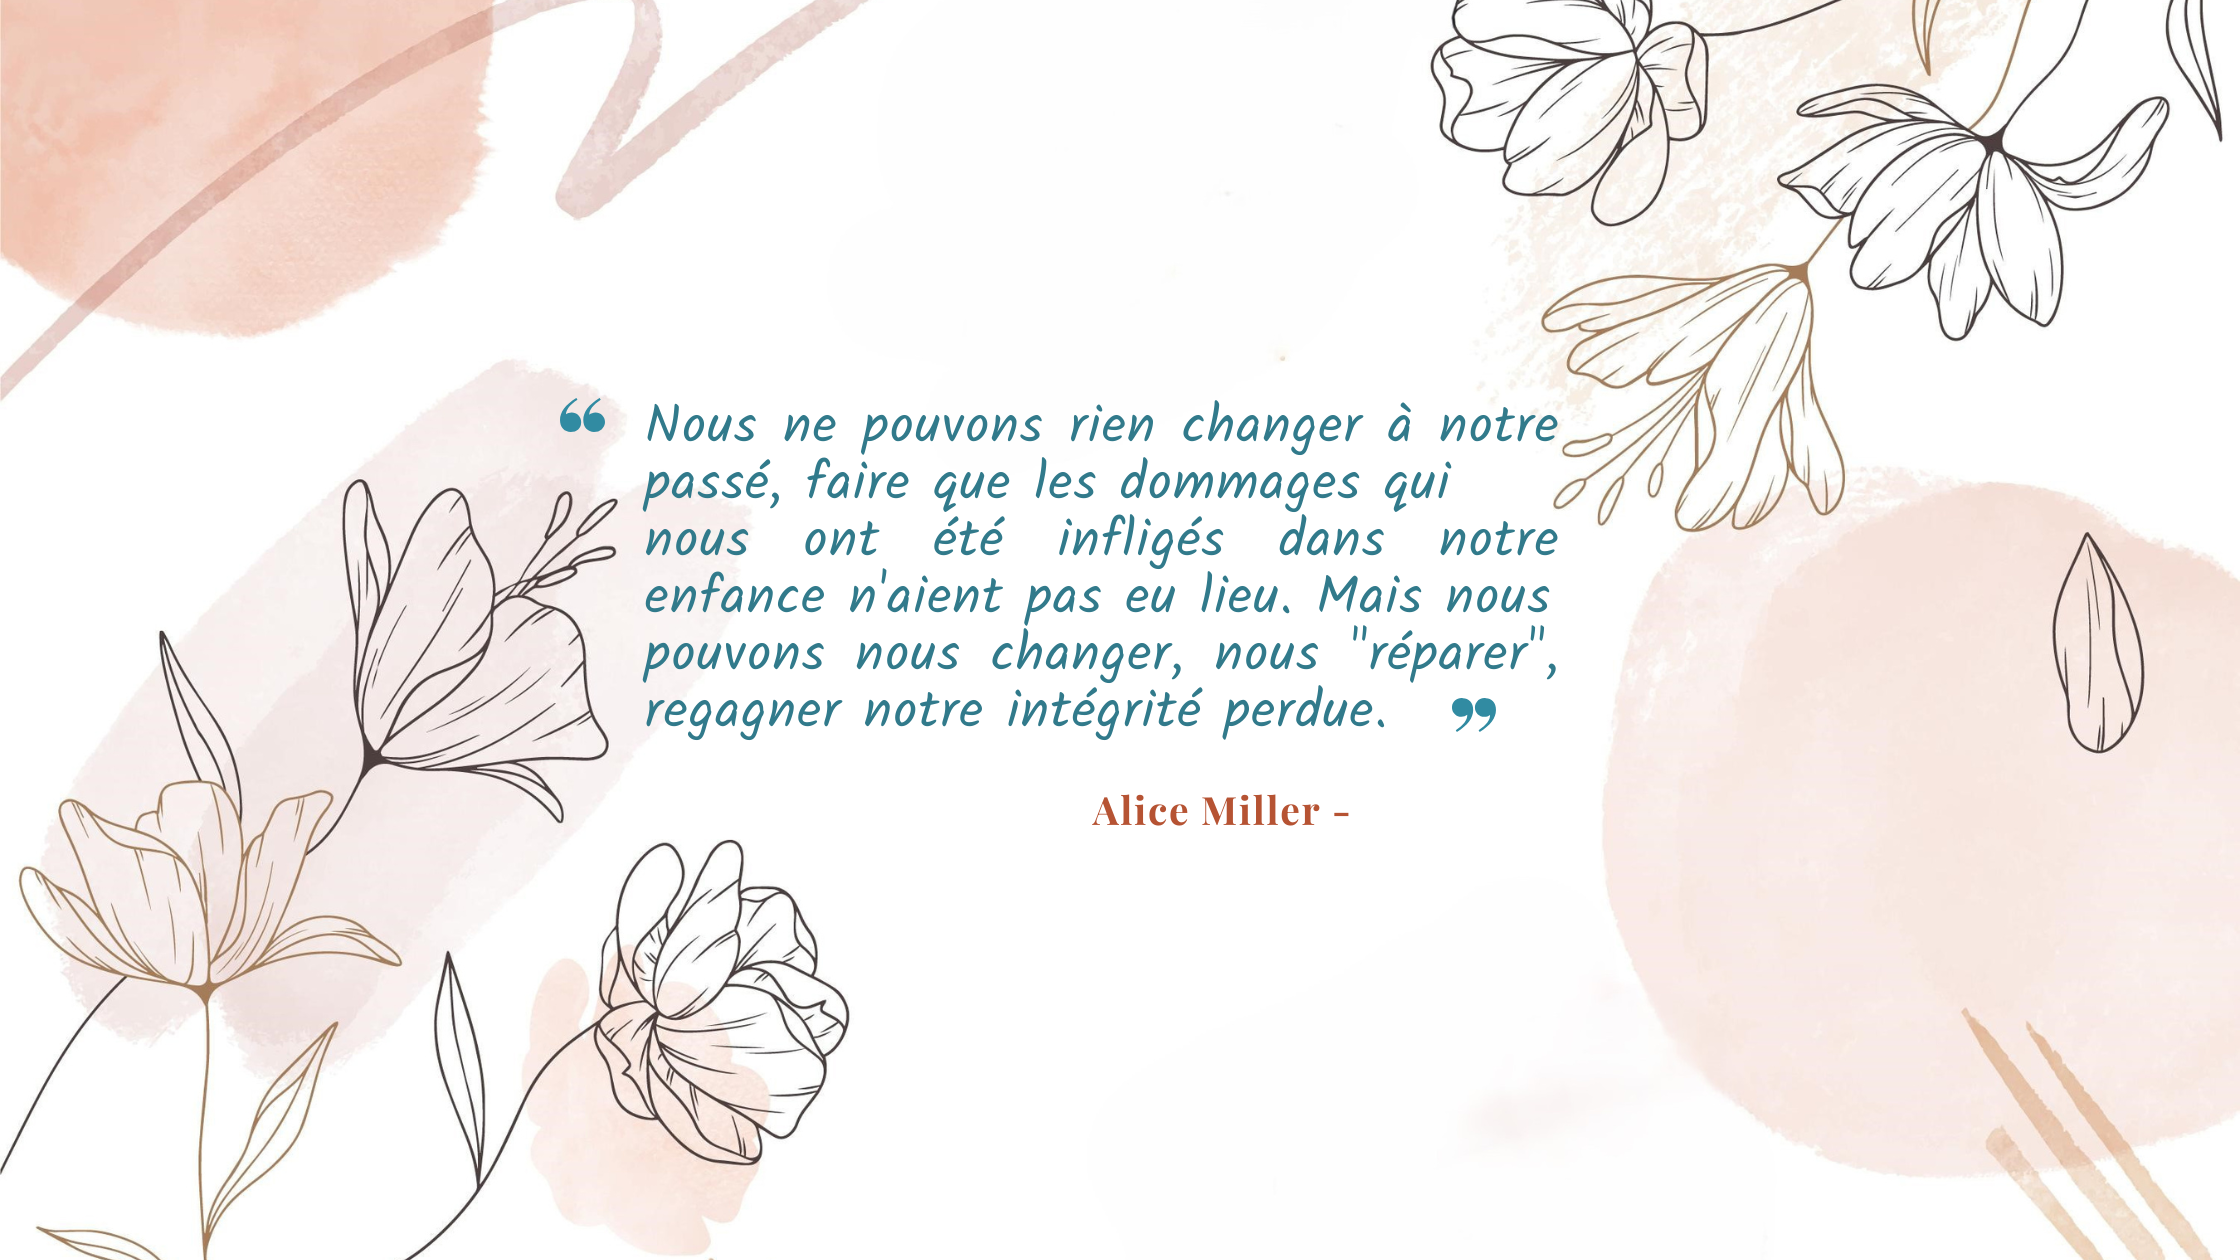 Alice Miller citation<br />
Manon Guillemain Psychothérapie